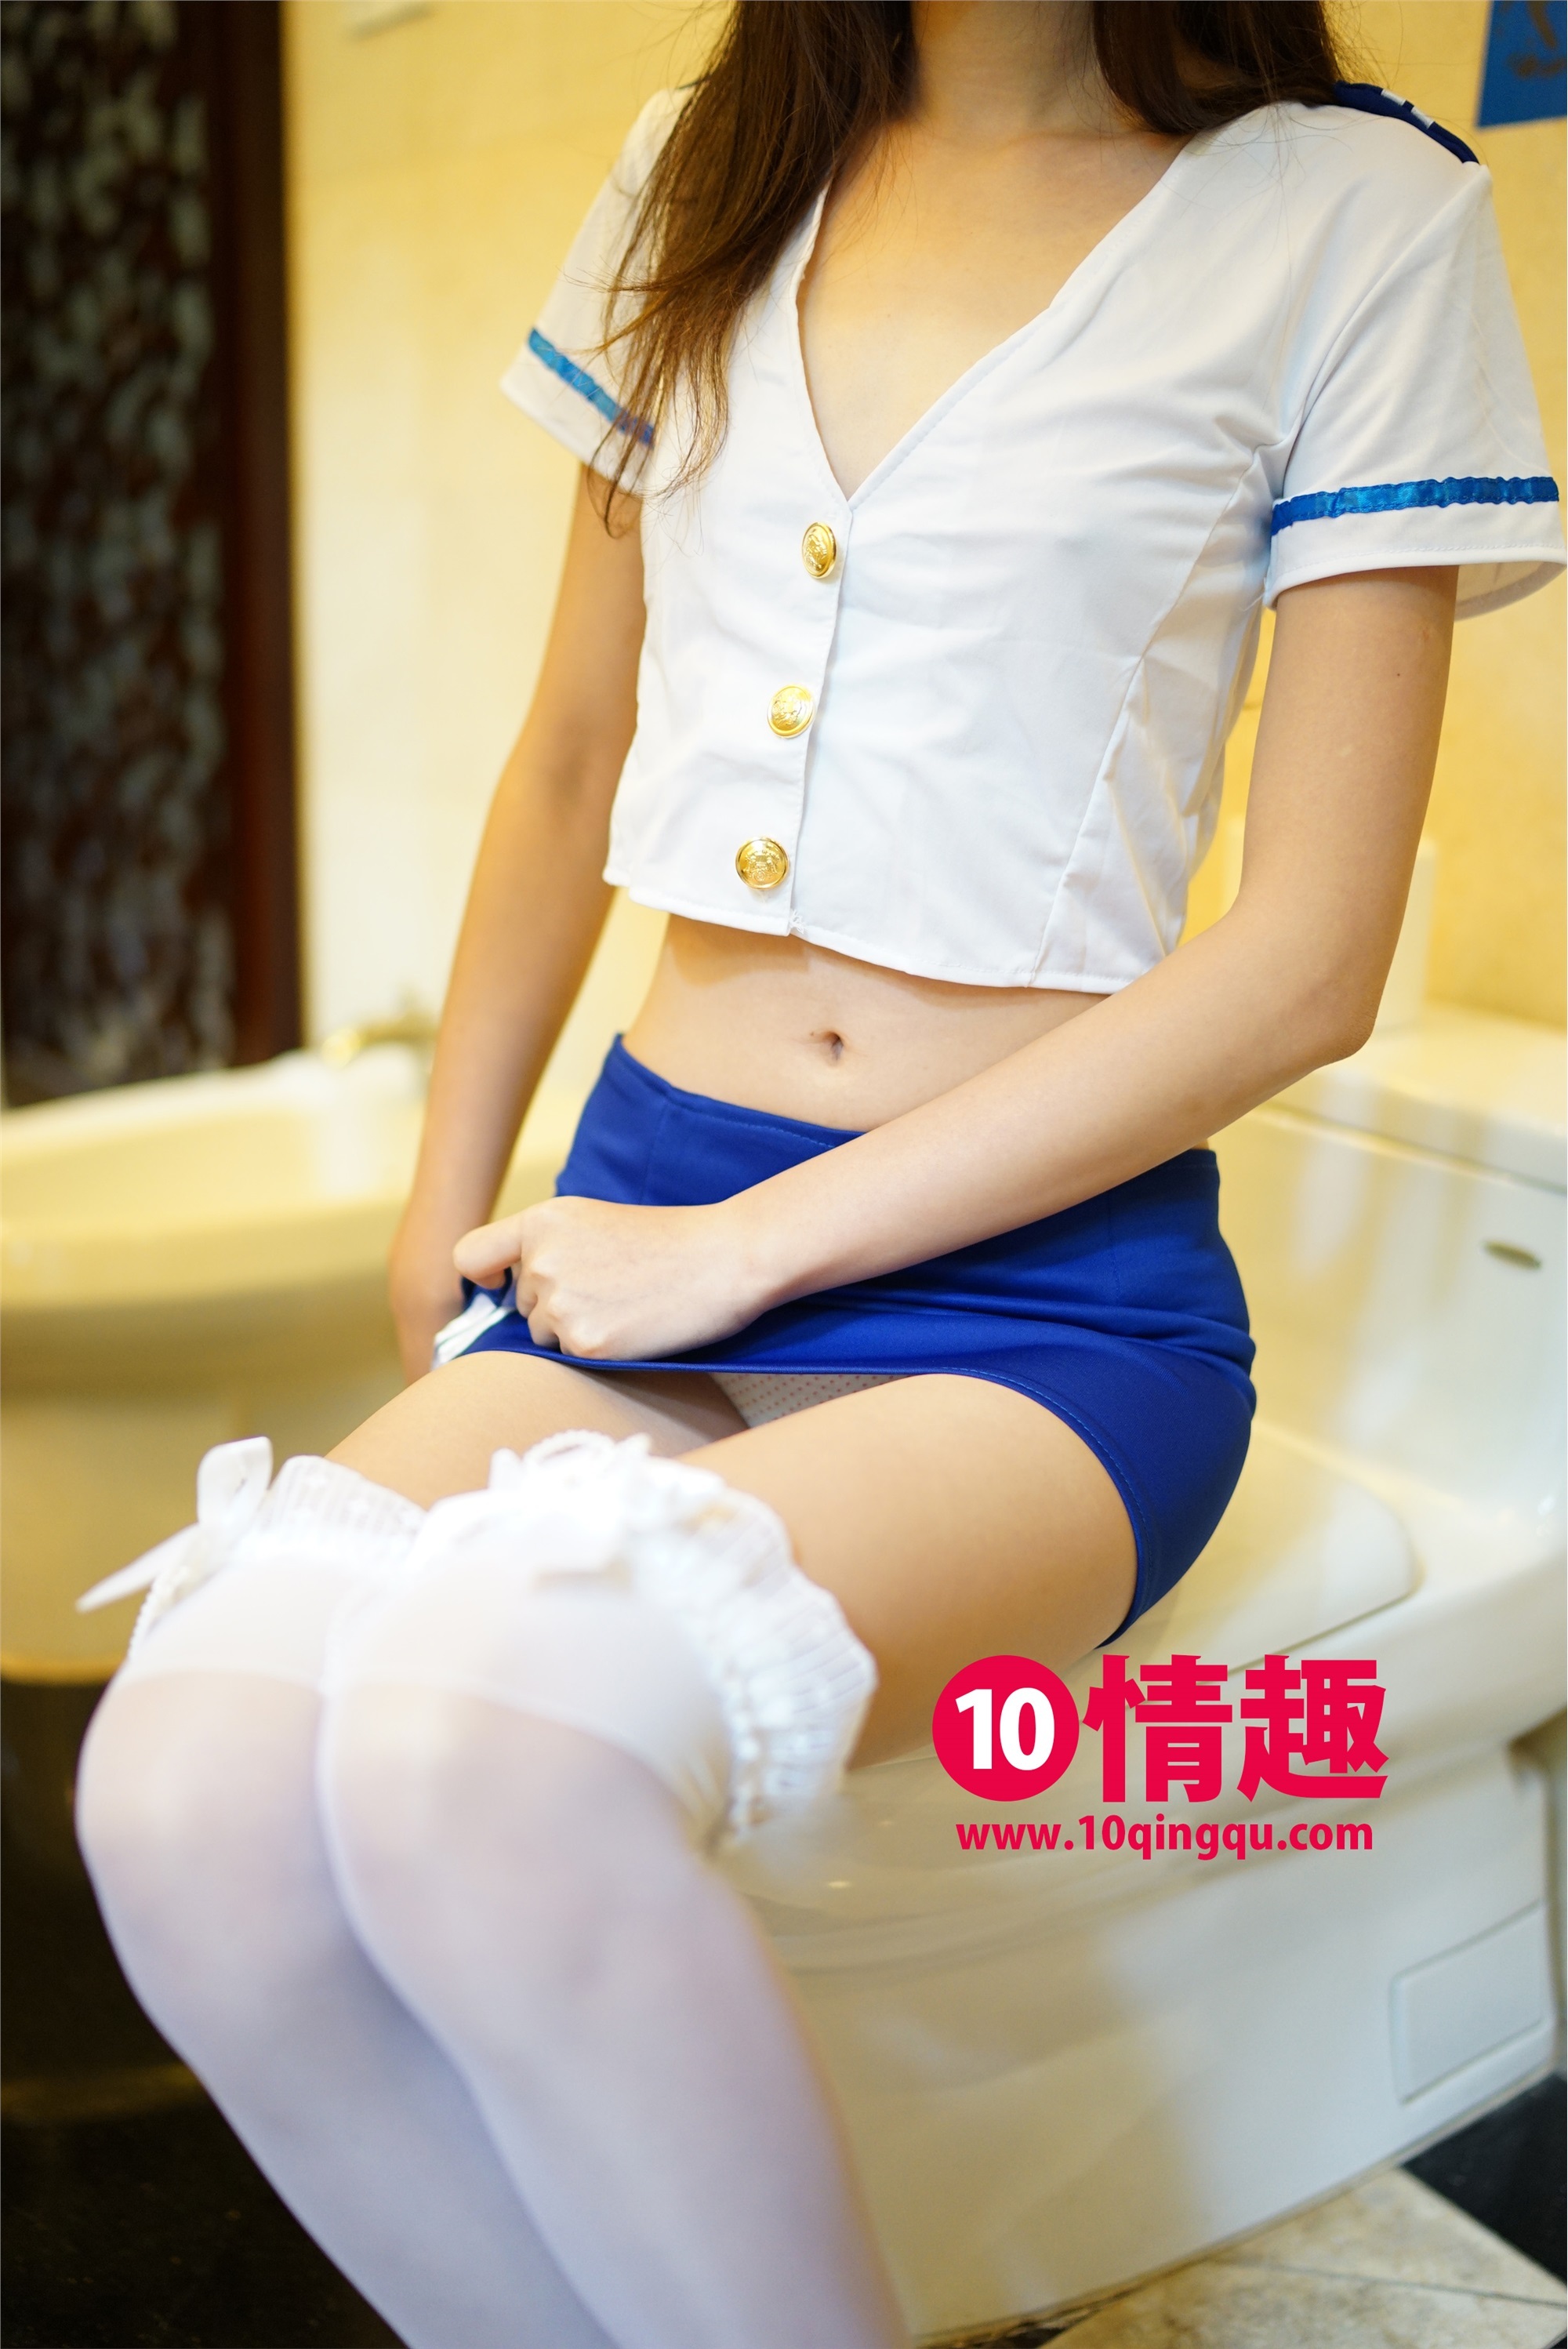 ROSI10 Fun 2015.05.27 No.010 Air hostess uniform set